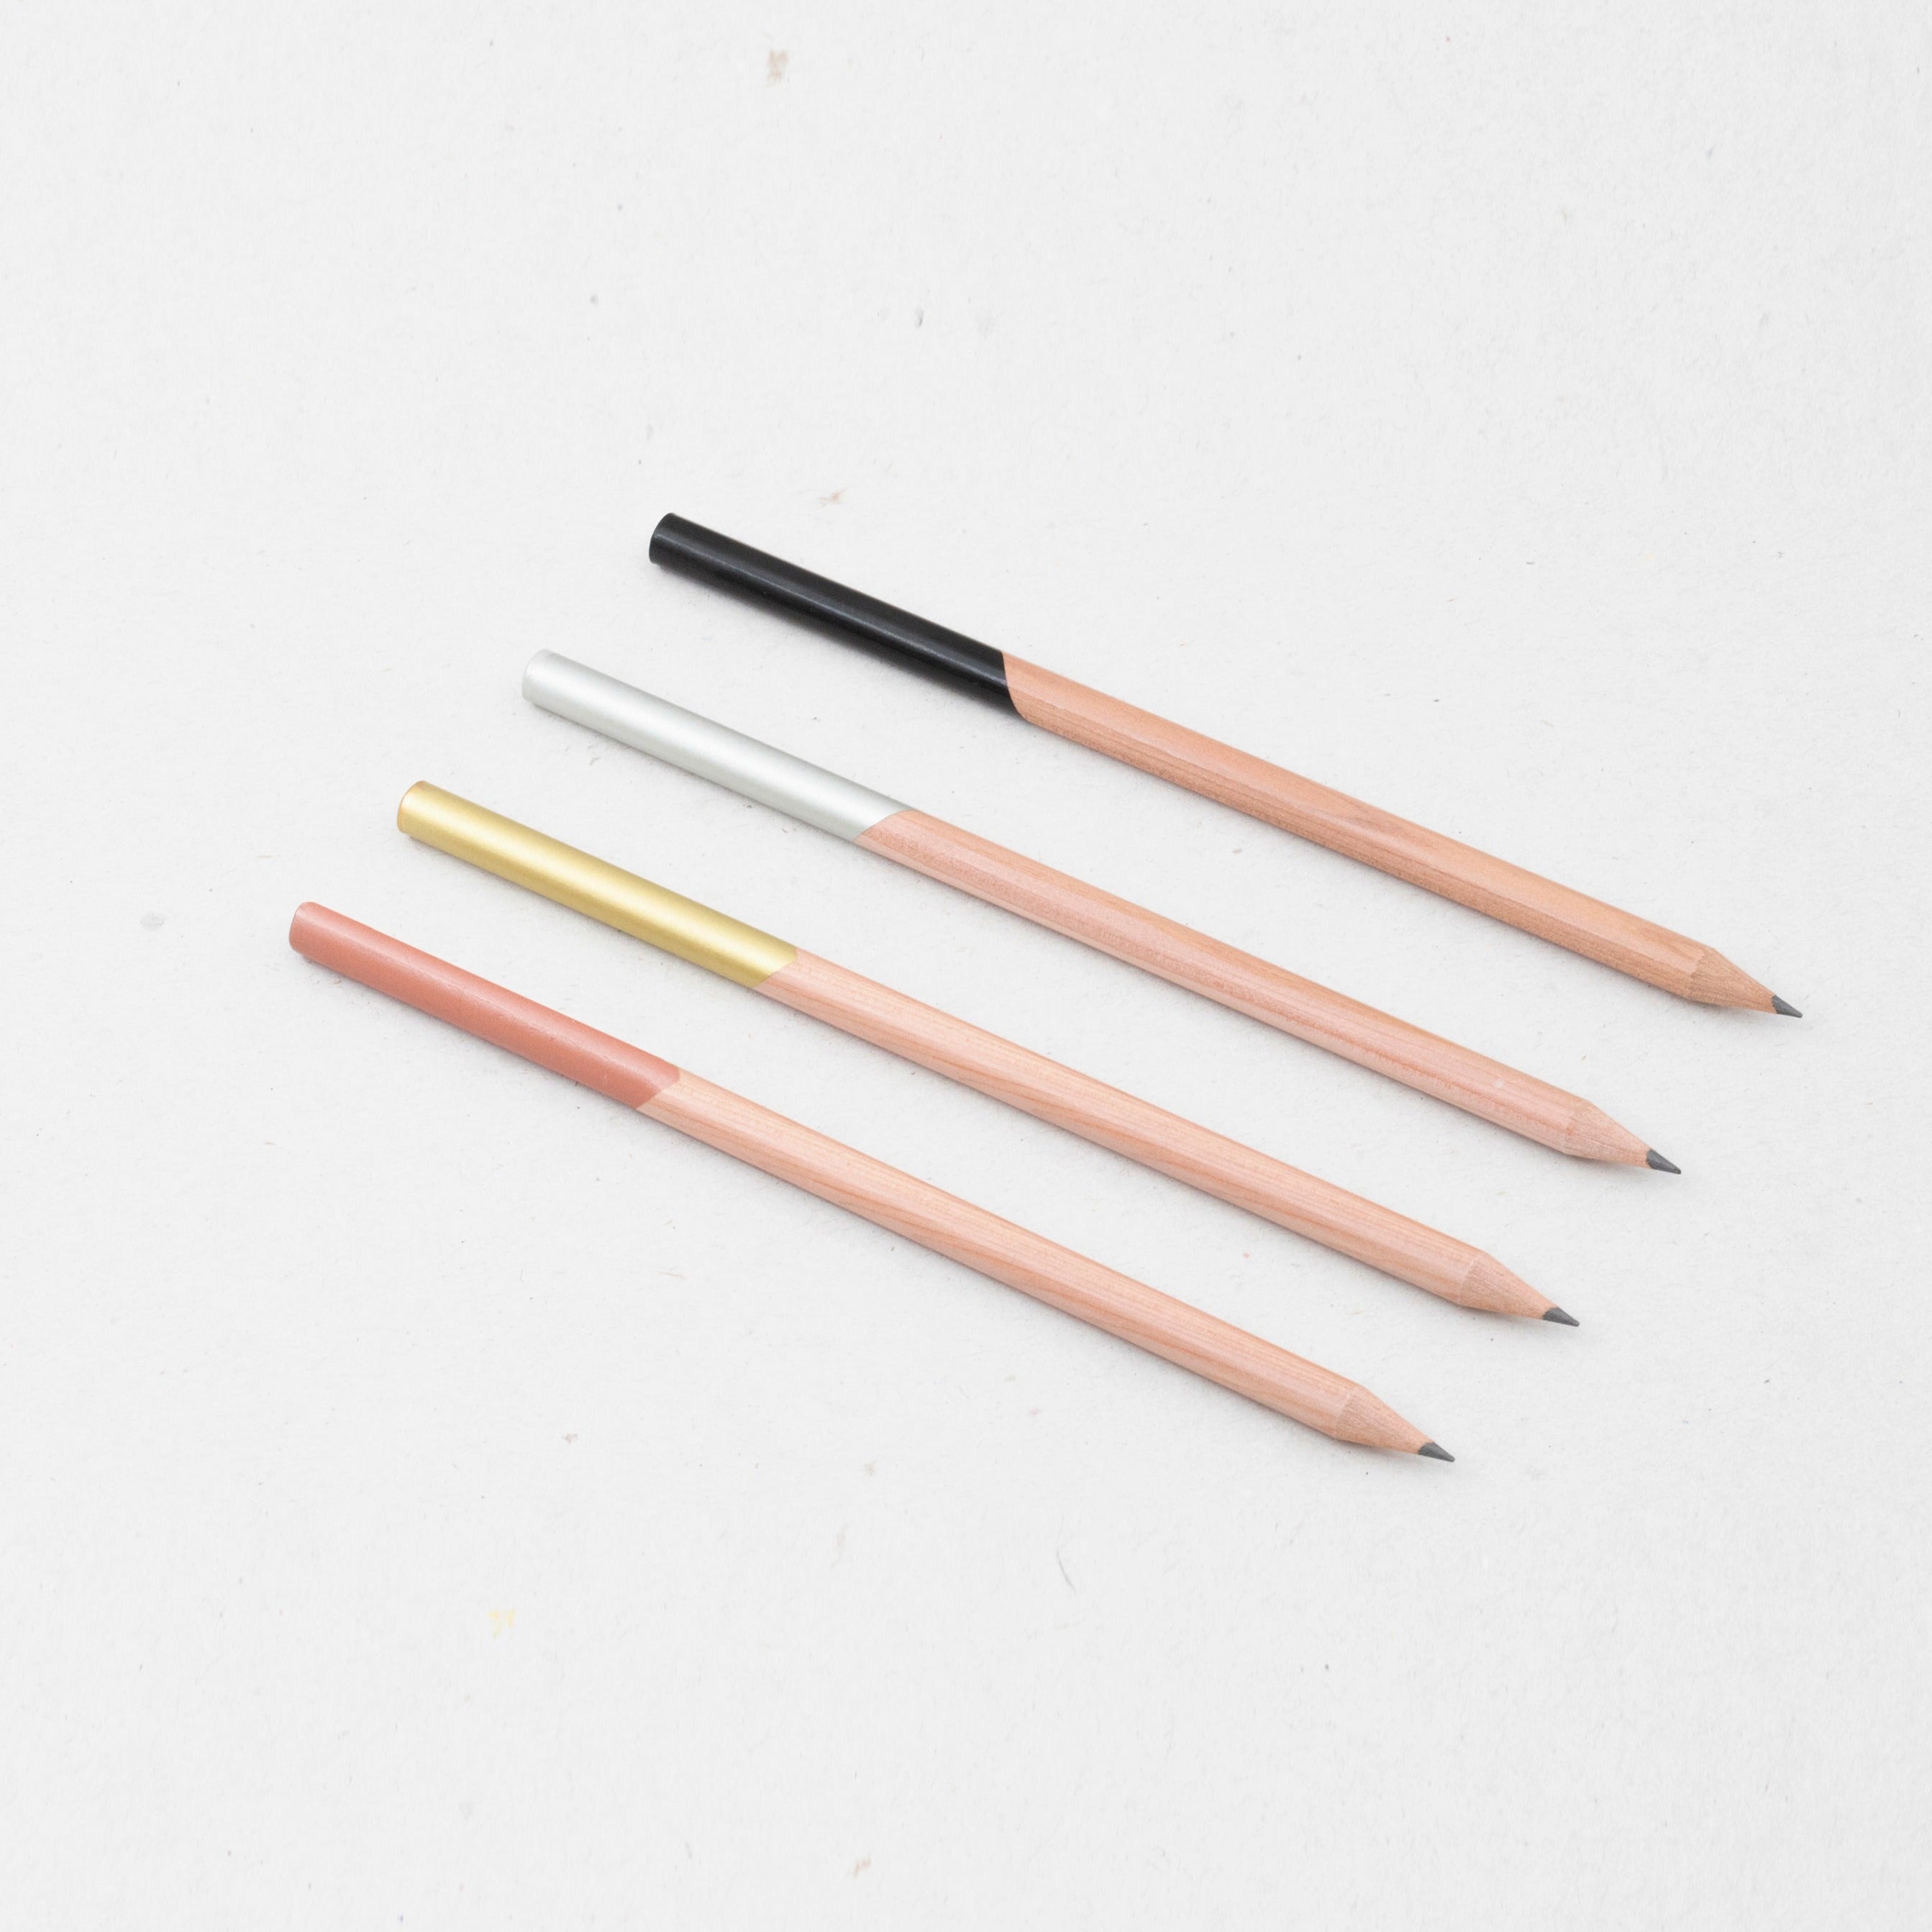 OCTÀGON DESIGN | Set of four wooden pencils copper, black, gold and silver color.